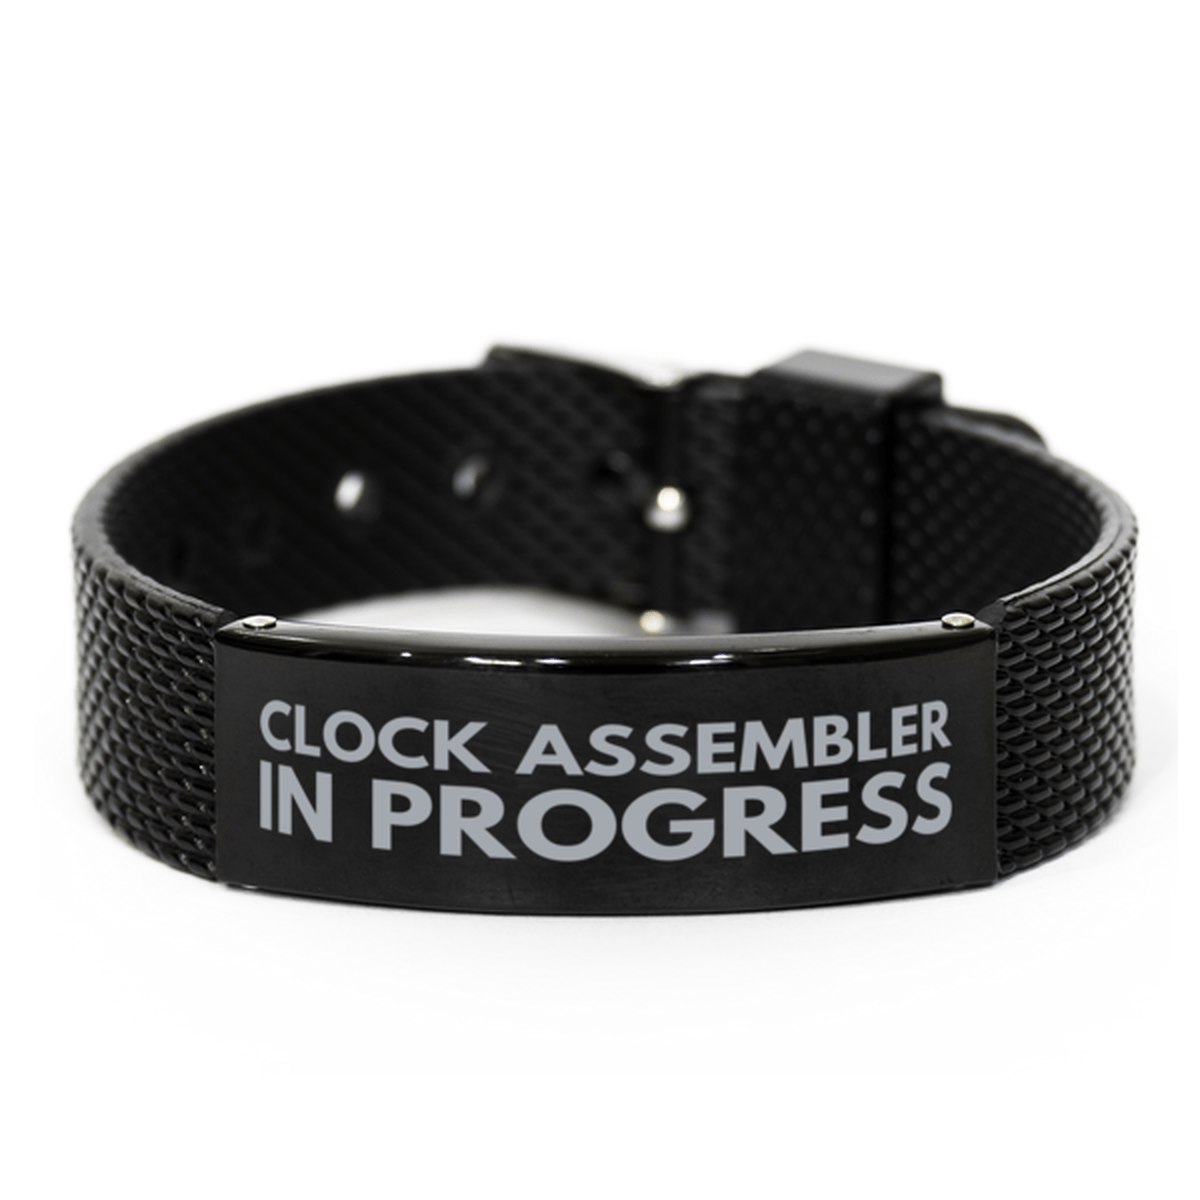 Inspirational Clock Assembler Black Shark Mesh Bracelet, Clock Assembler In Progress, Best Graduation Gifts for Students